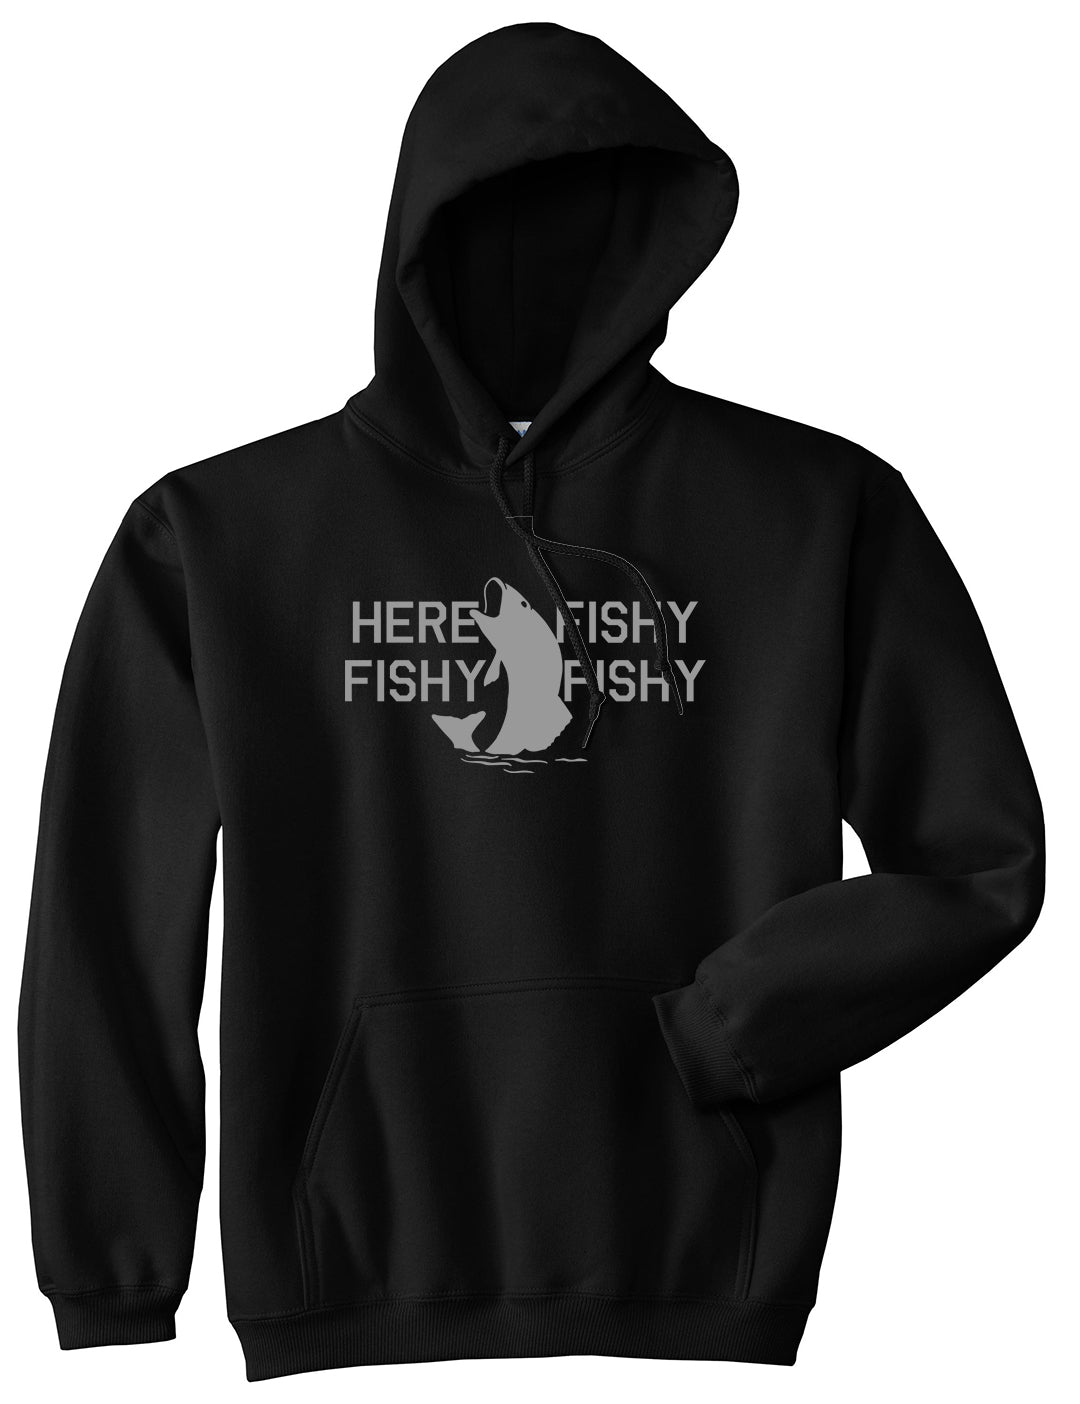 Here Fishy Fishy Fishy Fisherman Mens Pullover Hoodie Black